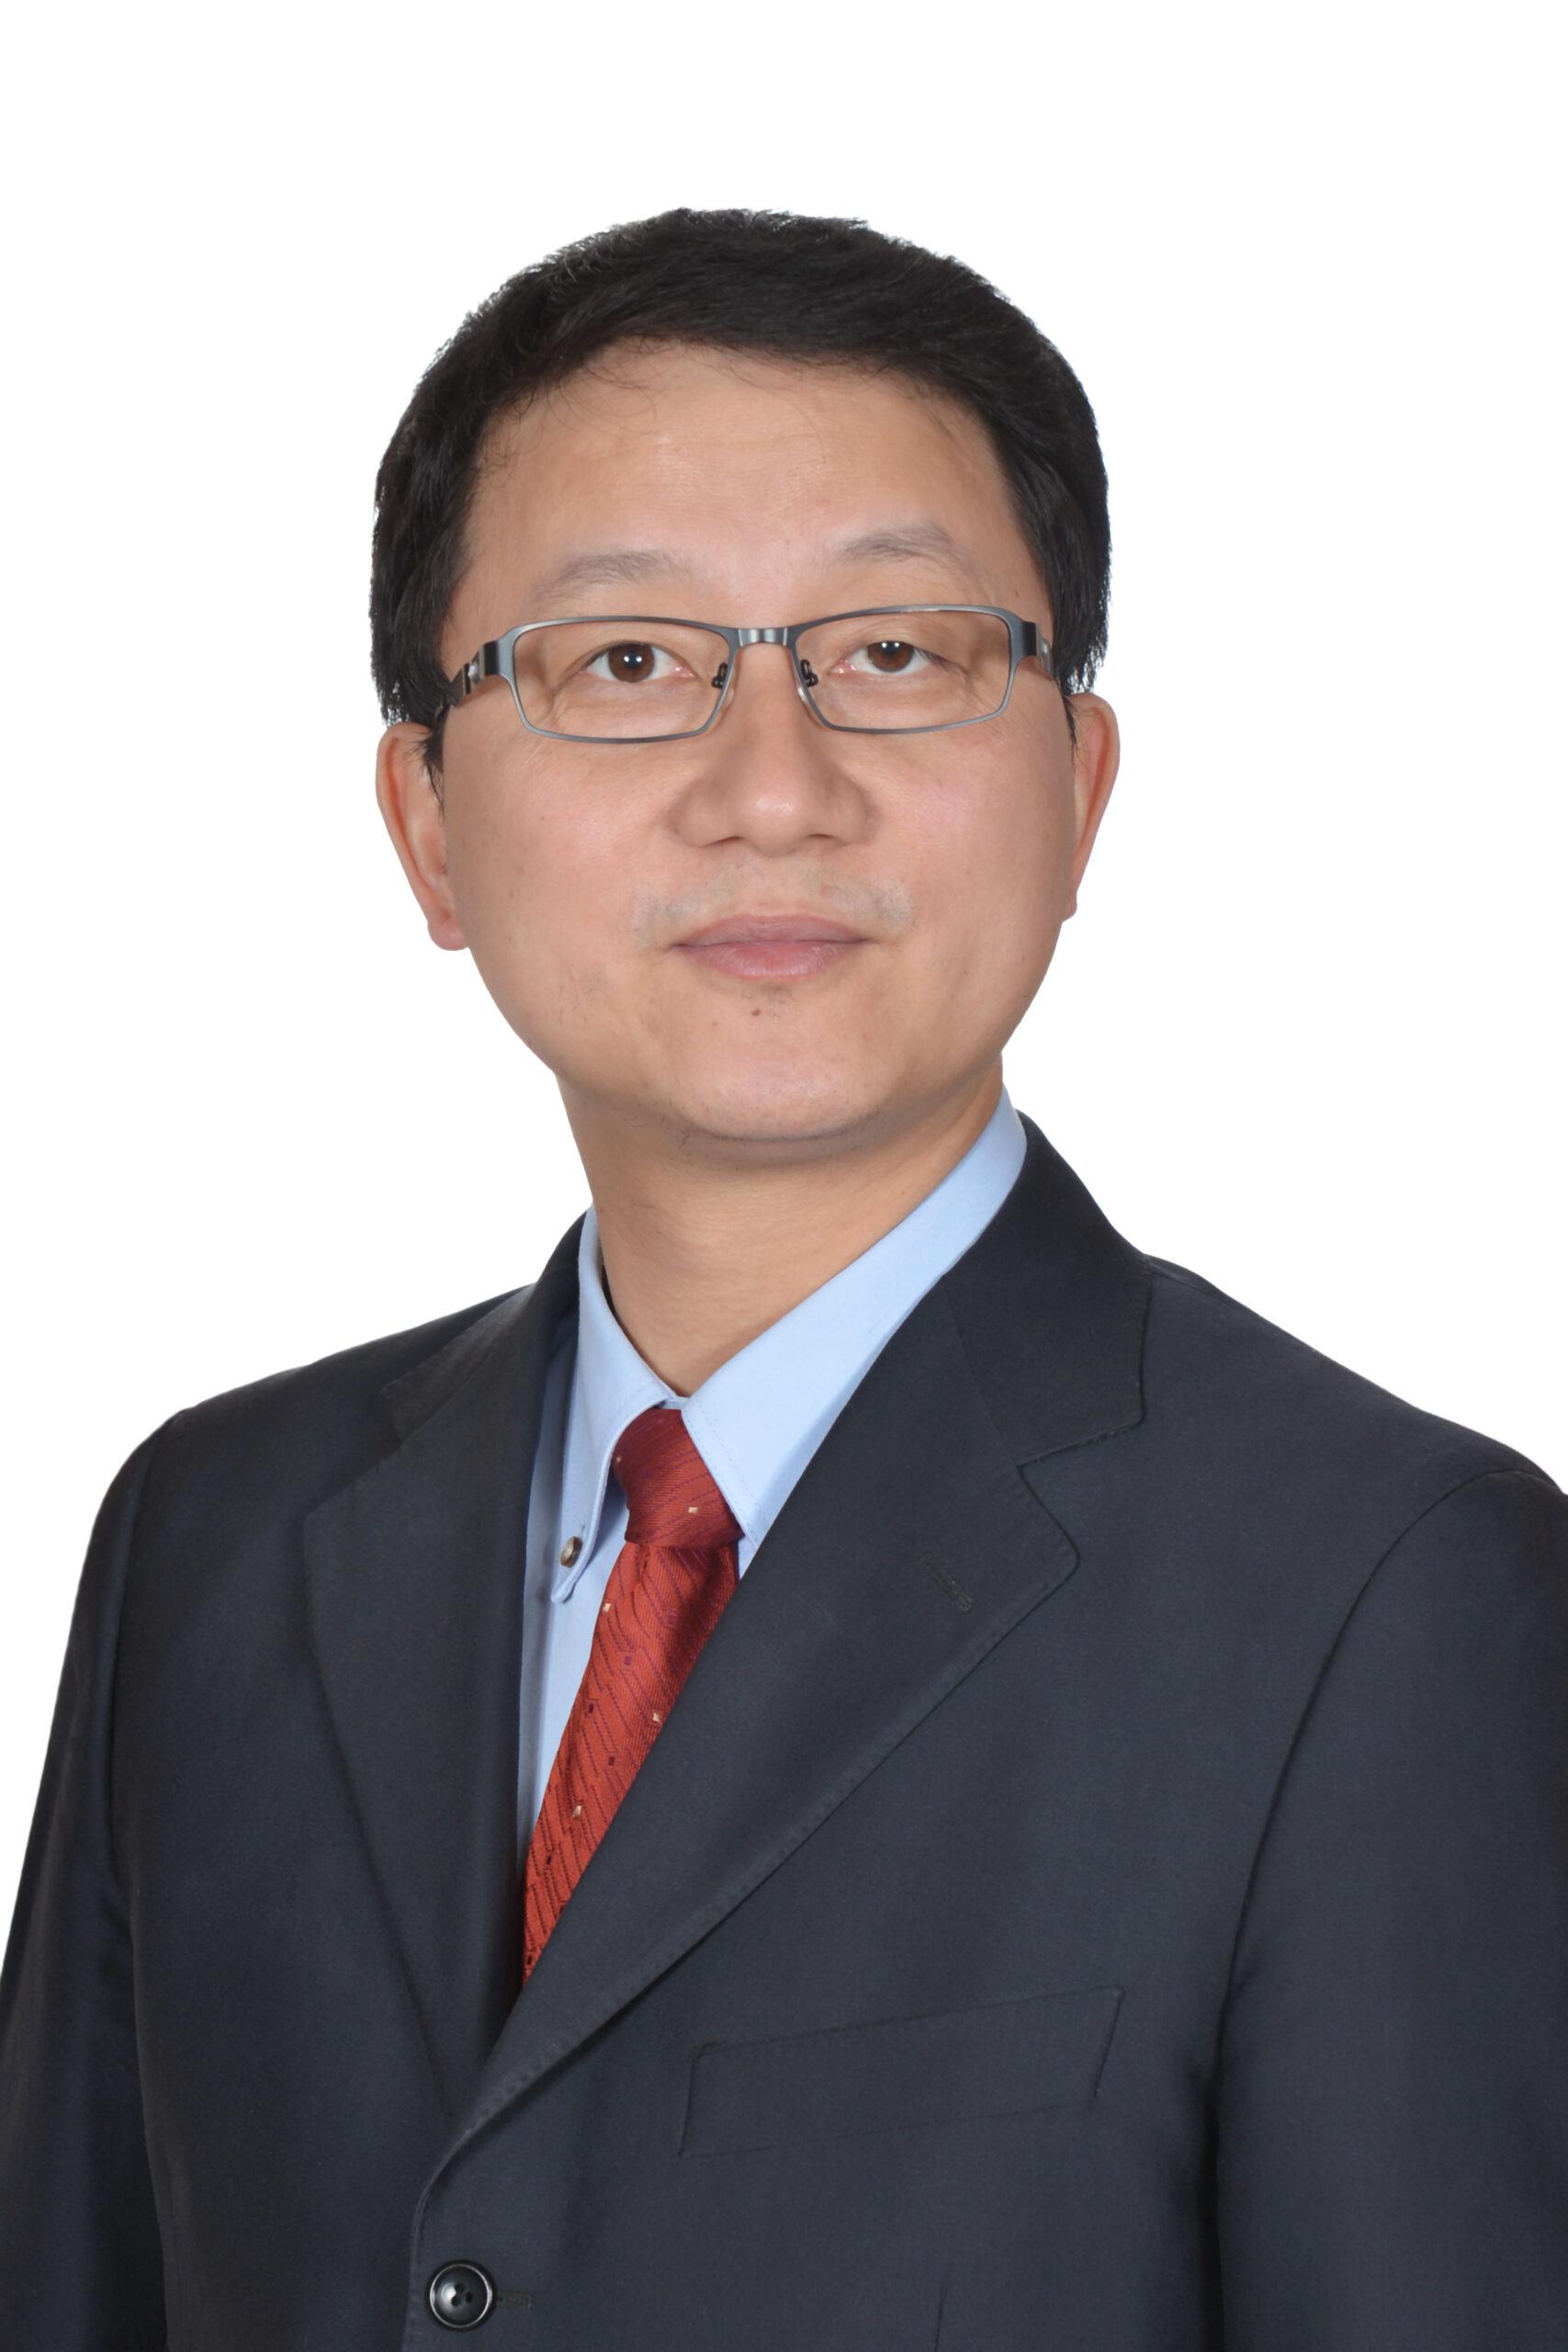 لیوجینگ سونگ سفیر،چین